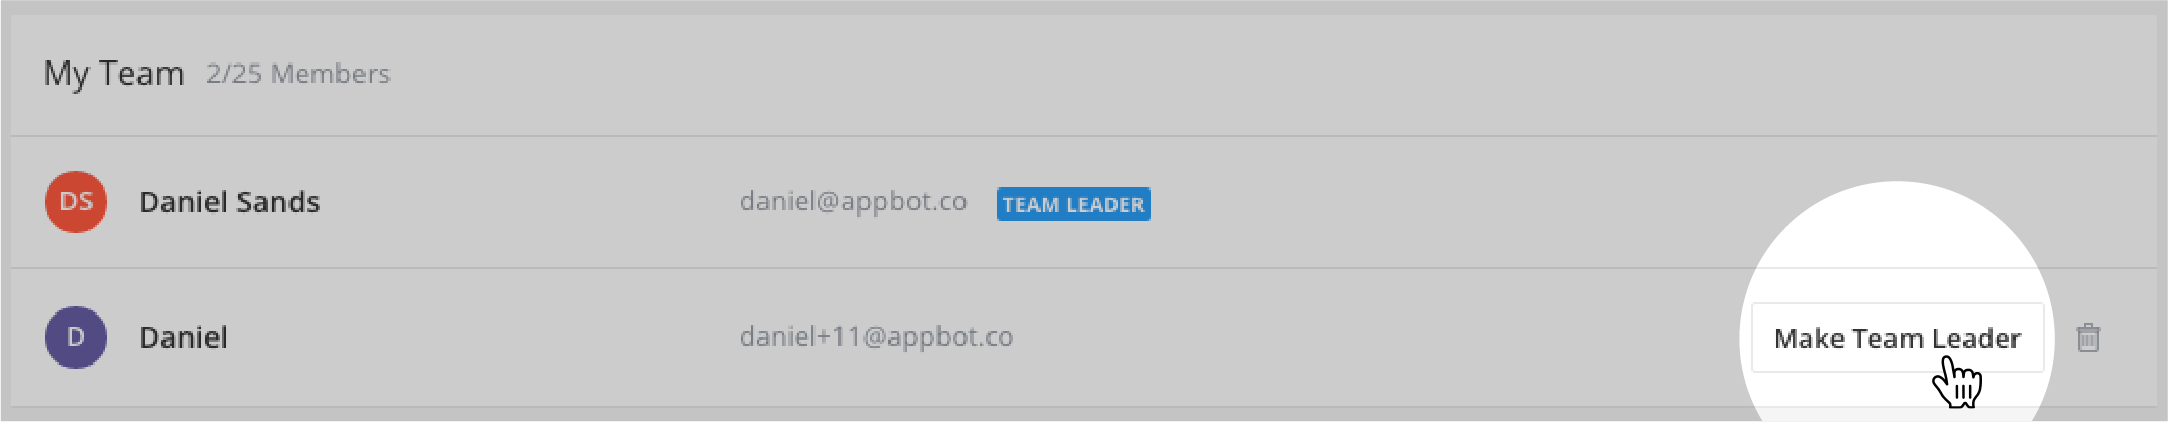 make someone team leader screenshot